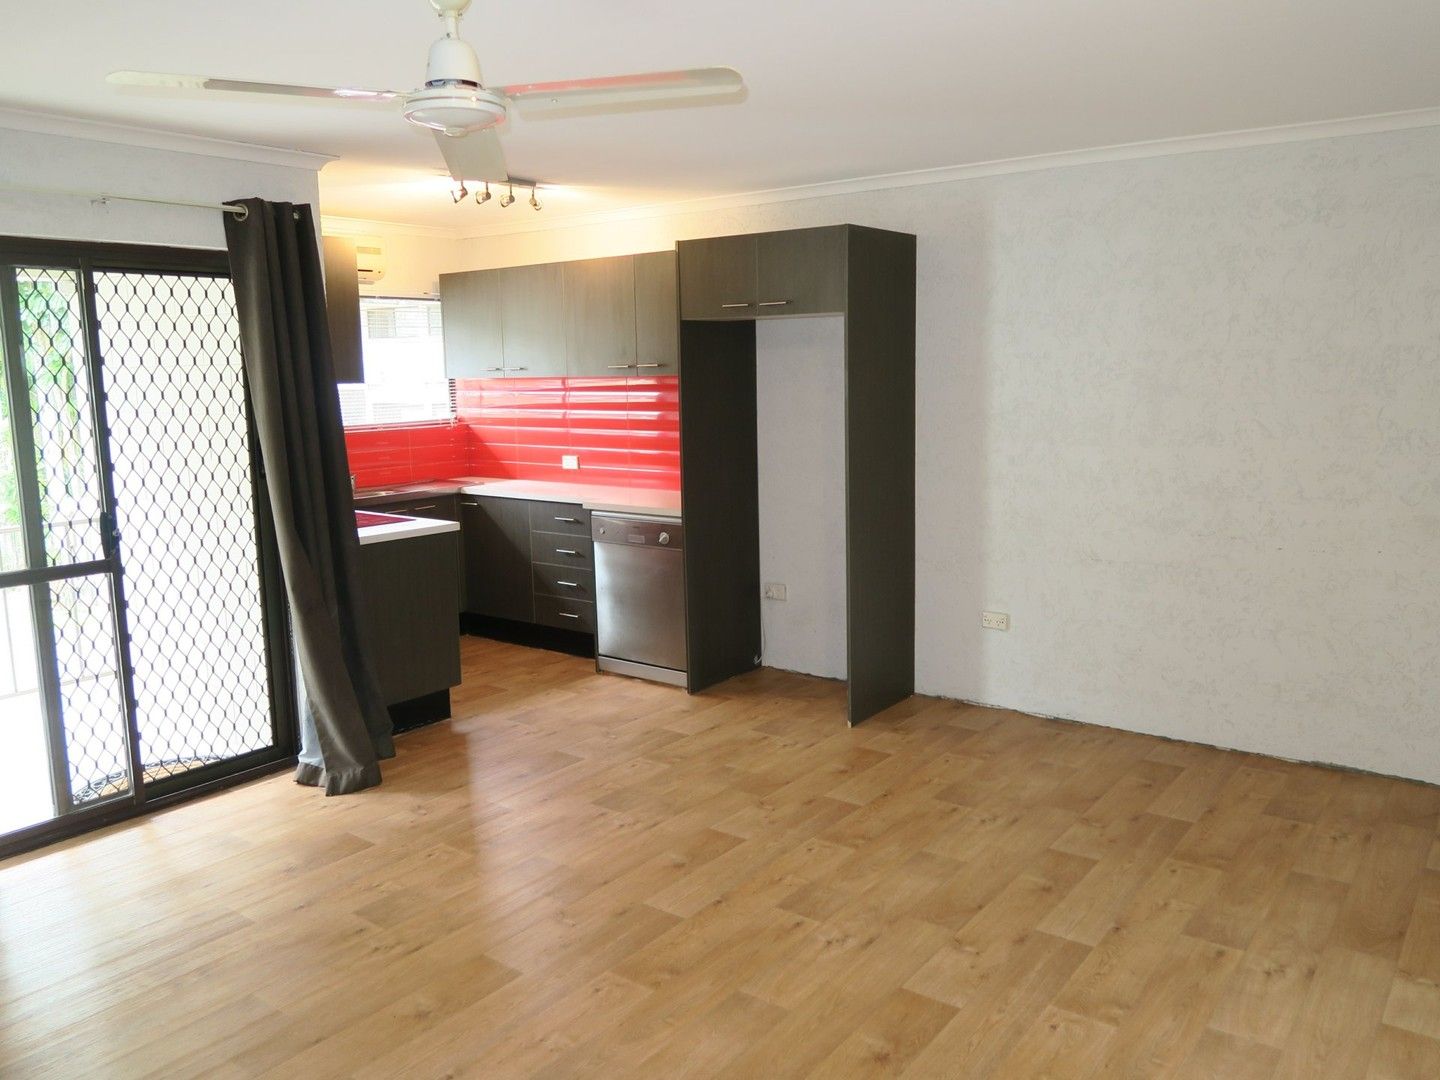 2 bedrooms Apartment / Unit / Flat in 26/50 Woodward Street EDGE HILL QLD, 4870